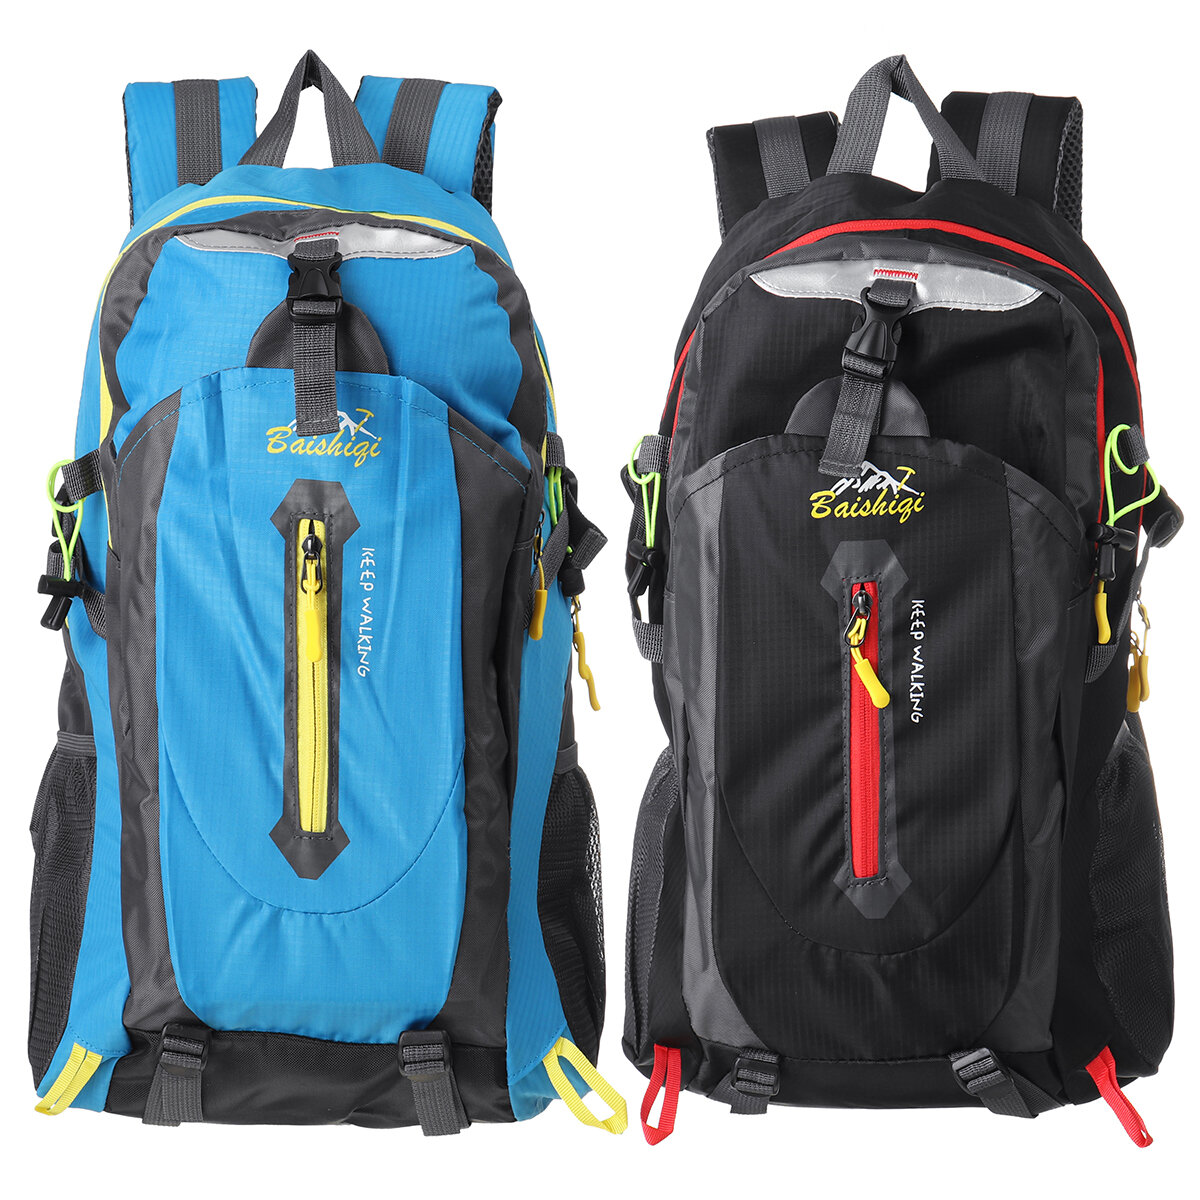 40L Large Capacity Waterproof Outdoor Sports Macbook Storage Backpack Camping Hiking Travel Bag